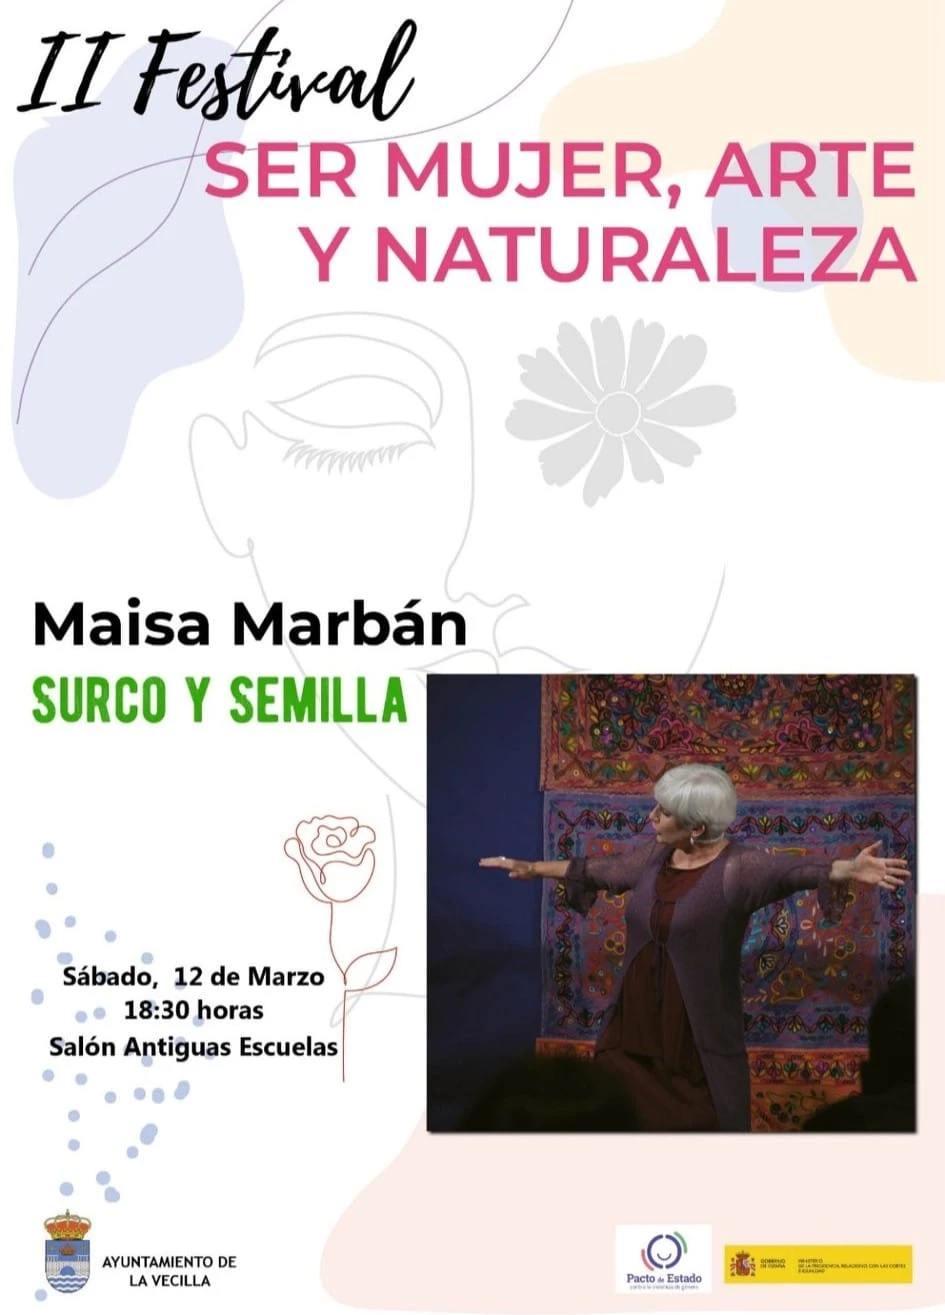 II Festival Ser mujer, arte y naturalez.0